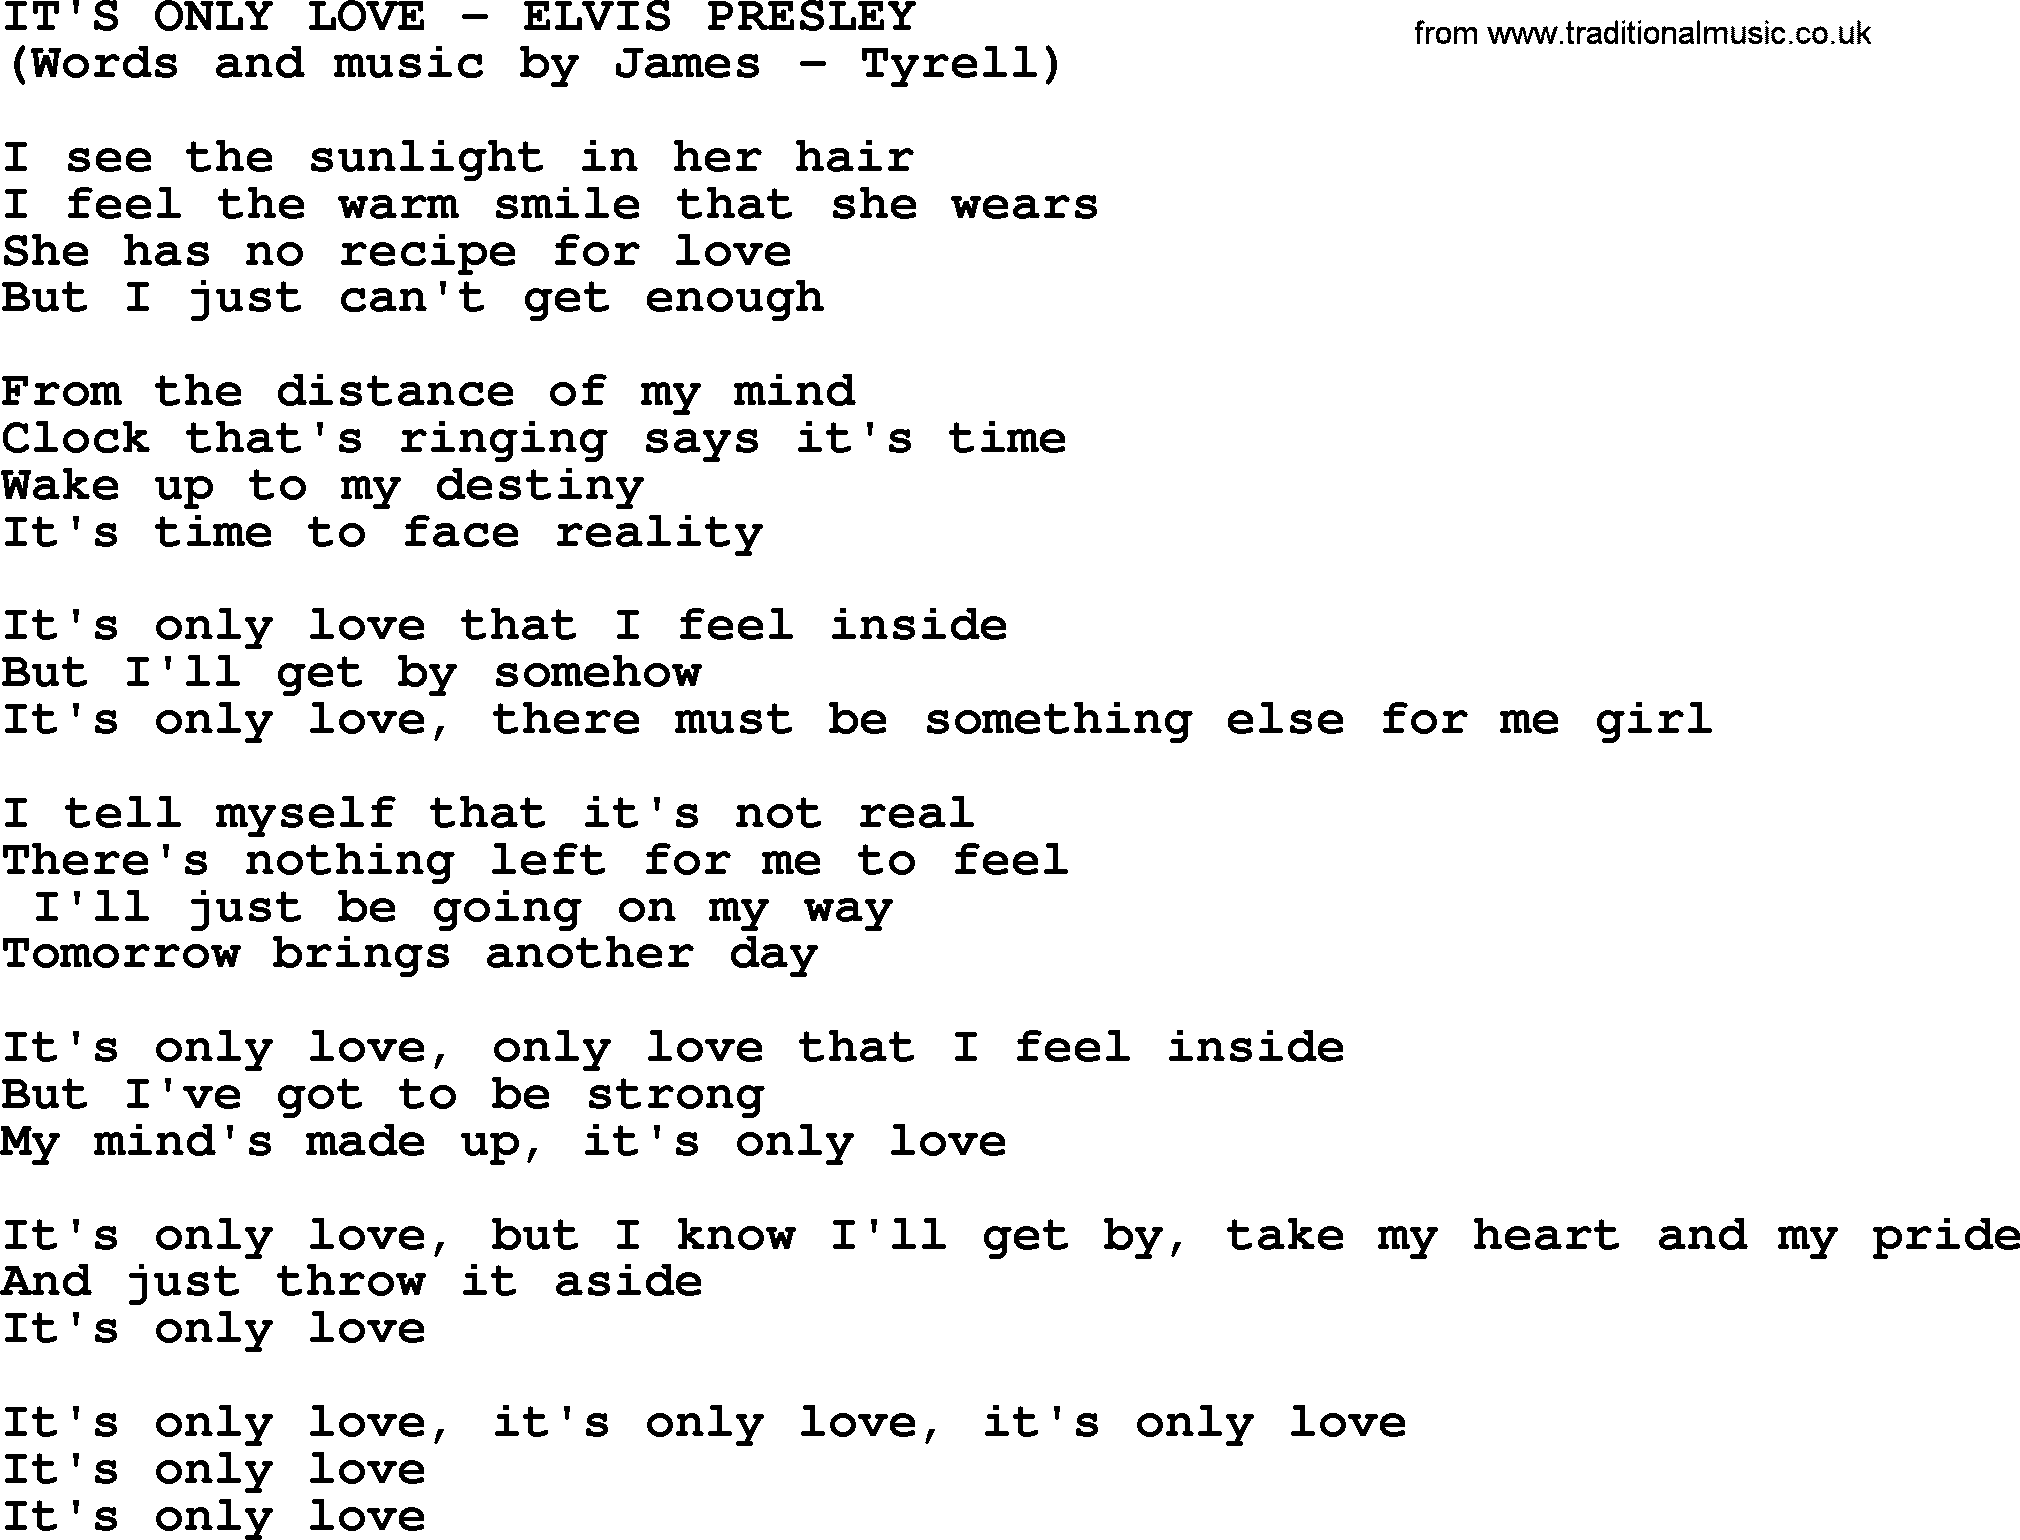 Elvis Presley song: It's Only Love lyrics